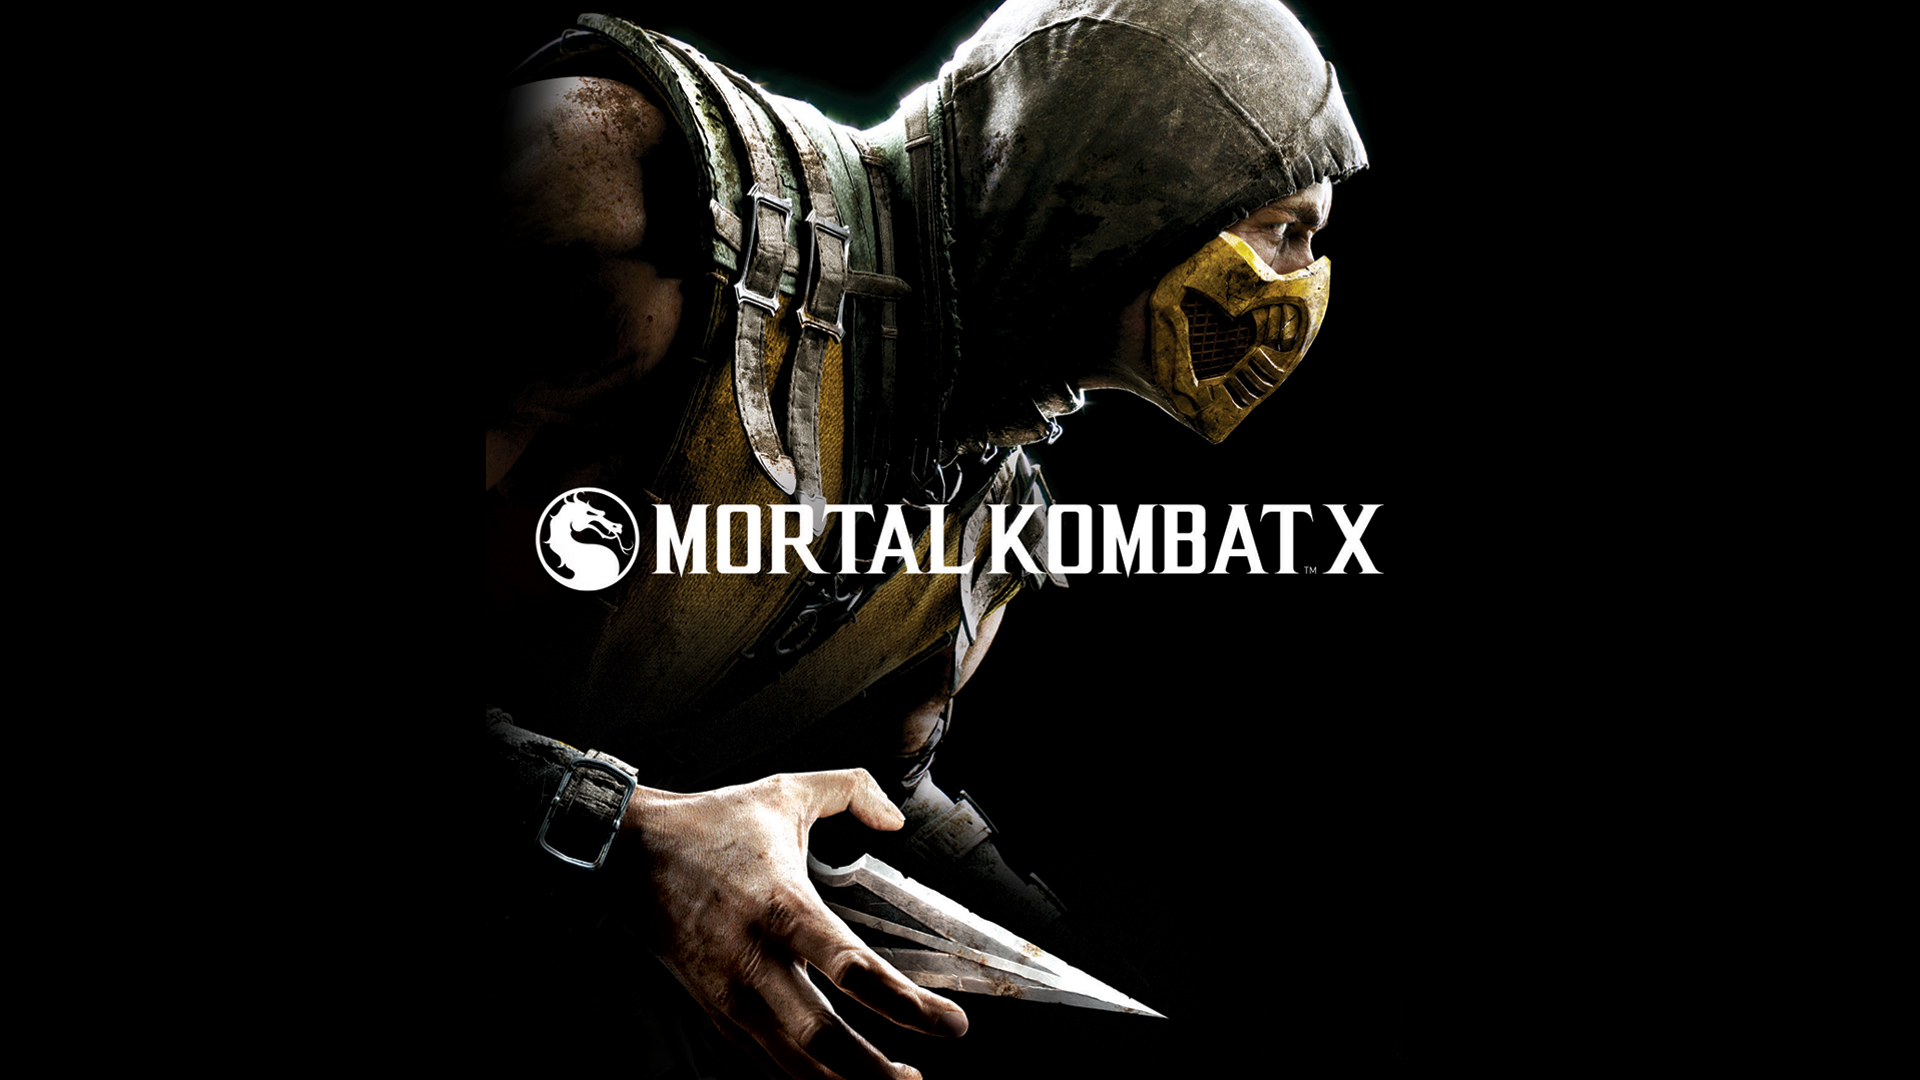 scorpion mortal kombat x combat game fighting hd 1920x1080 1080p